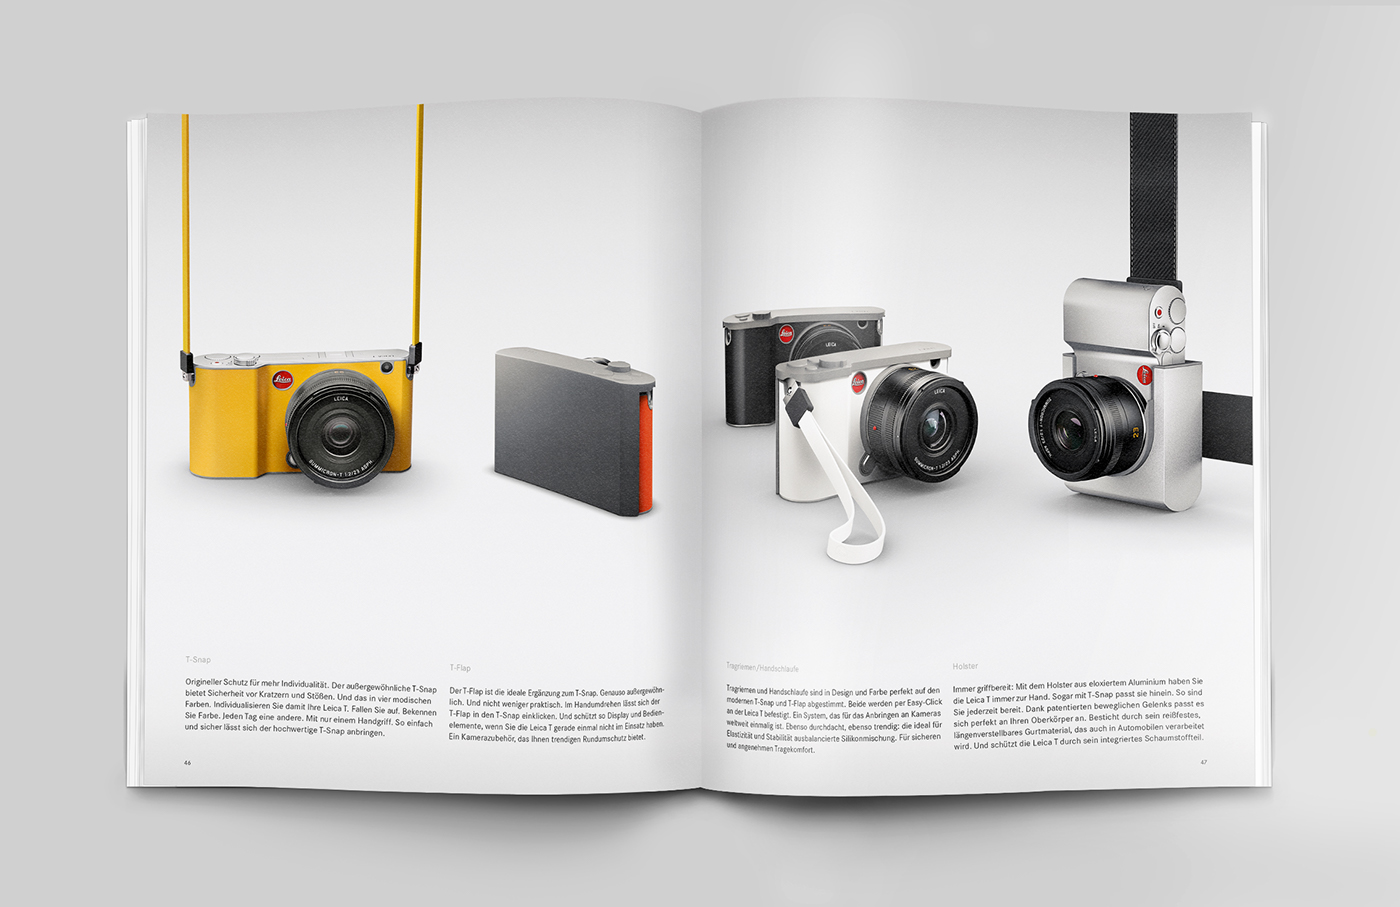 Leica camera Leica leica t design camera brochure advertisement poster unibody Focus essentials reduced photo graphic type